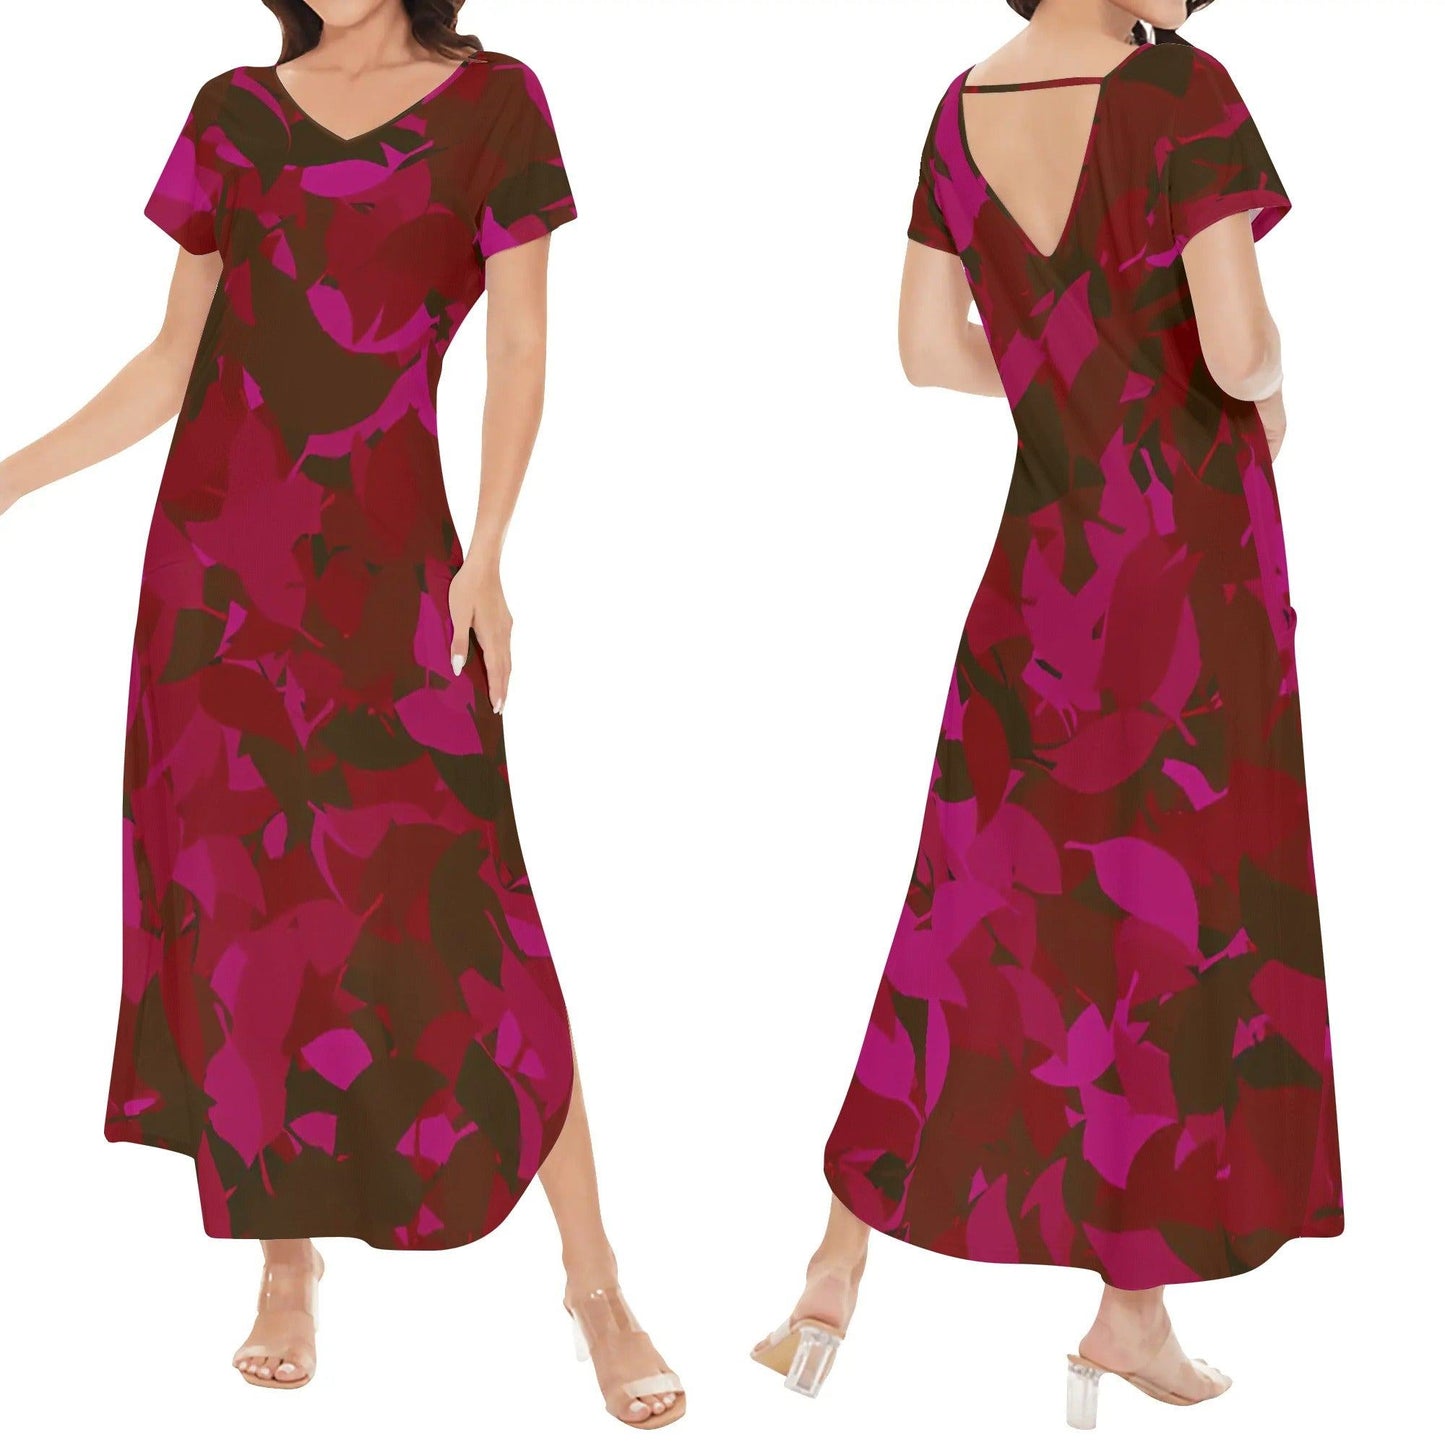 Red Leaf kurzärmliges drapiertes Kleid drapiertes Kleid 63.99 drapiert, kleid, kurzärmlig, Leaf, red JLR Design